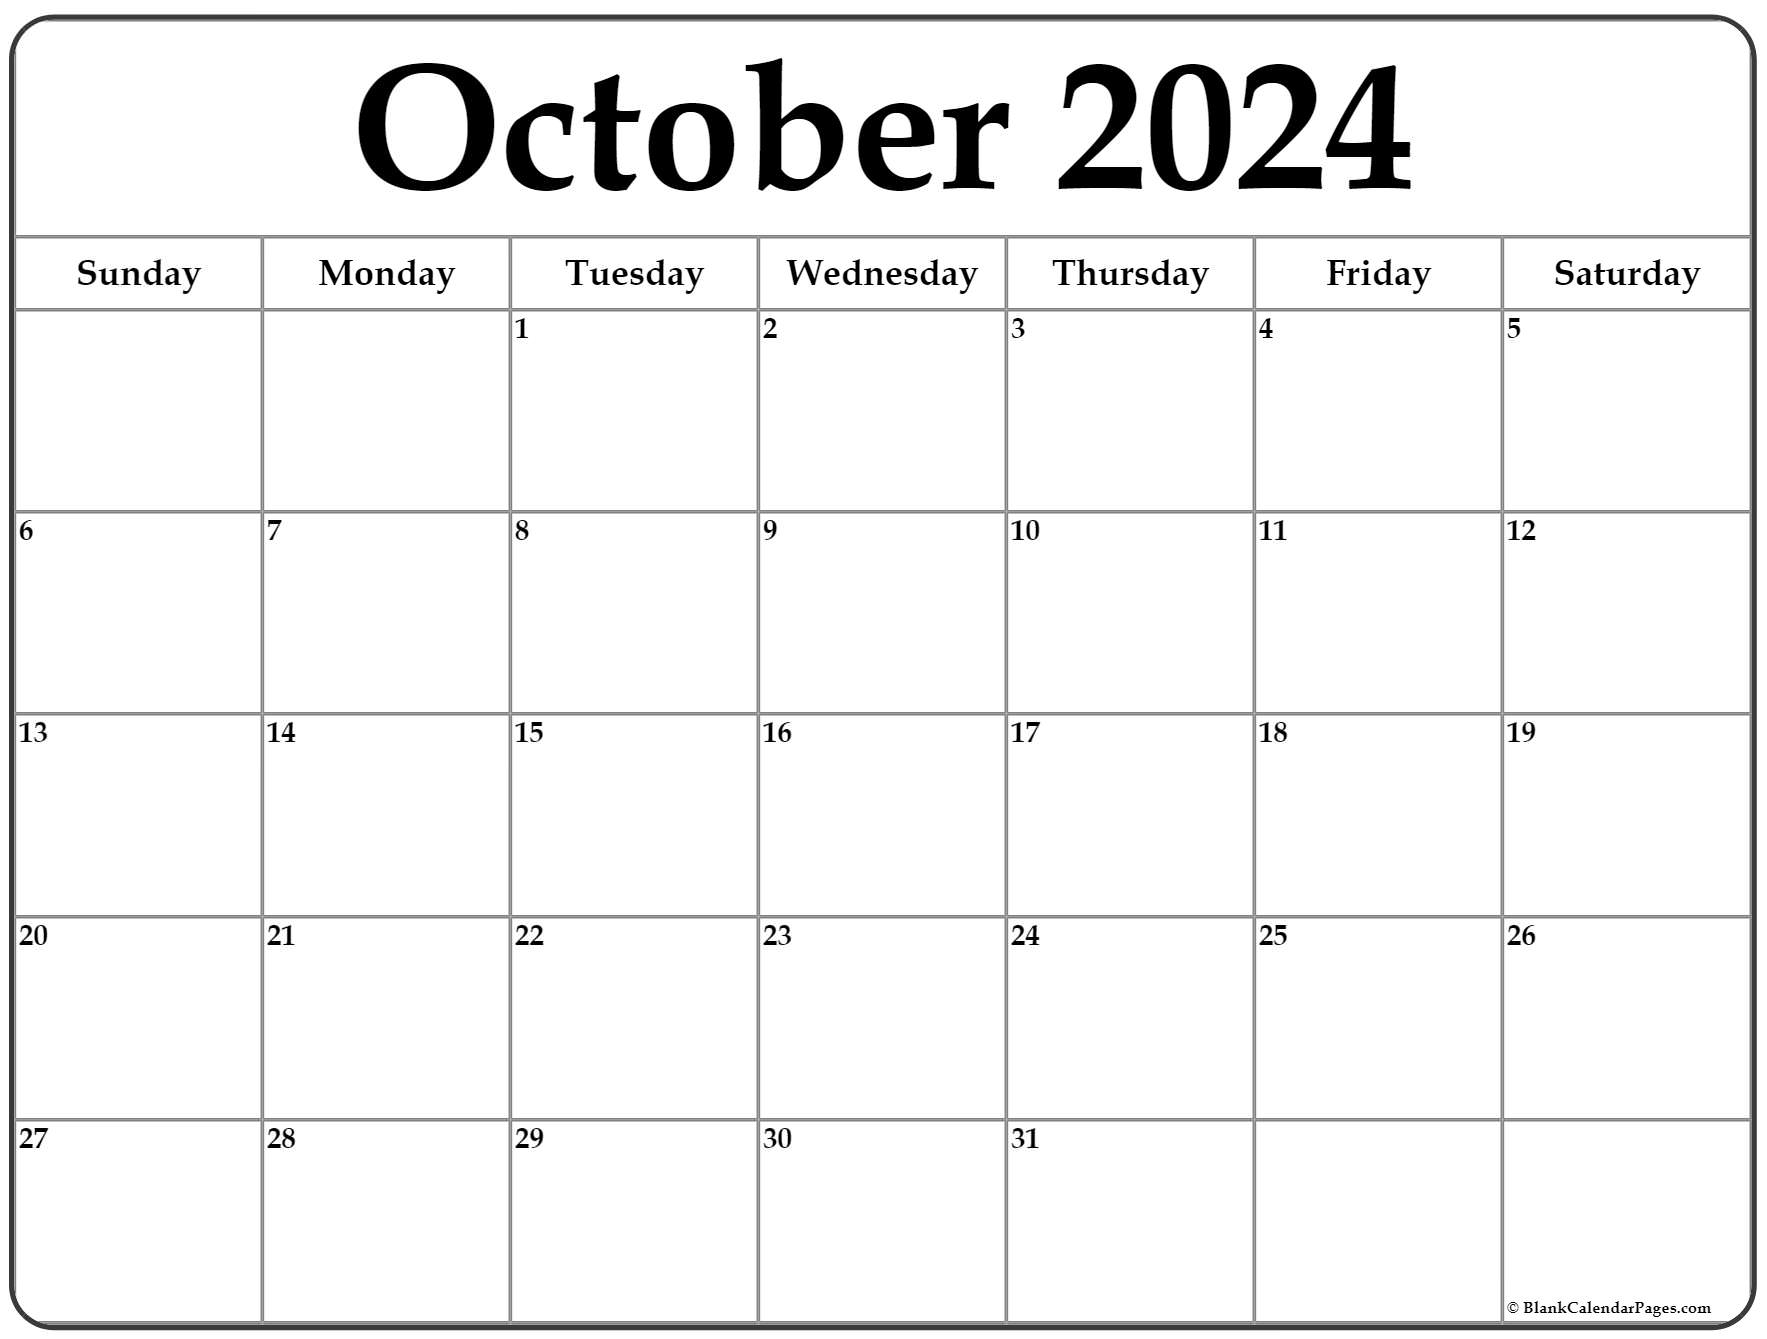 October 2022 Calendar Printable Free October 2022 Calendar | Free Printable Calendar Templates